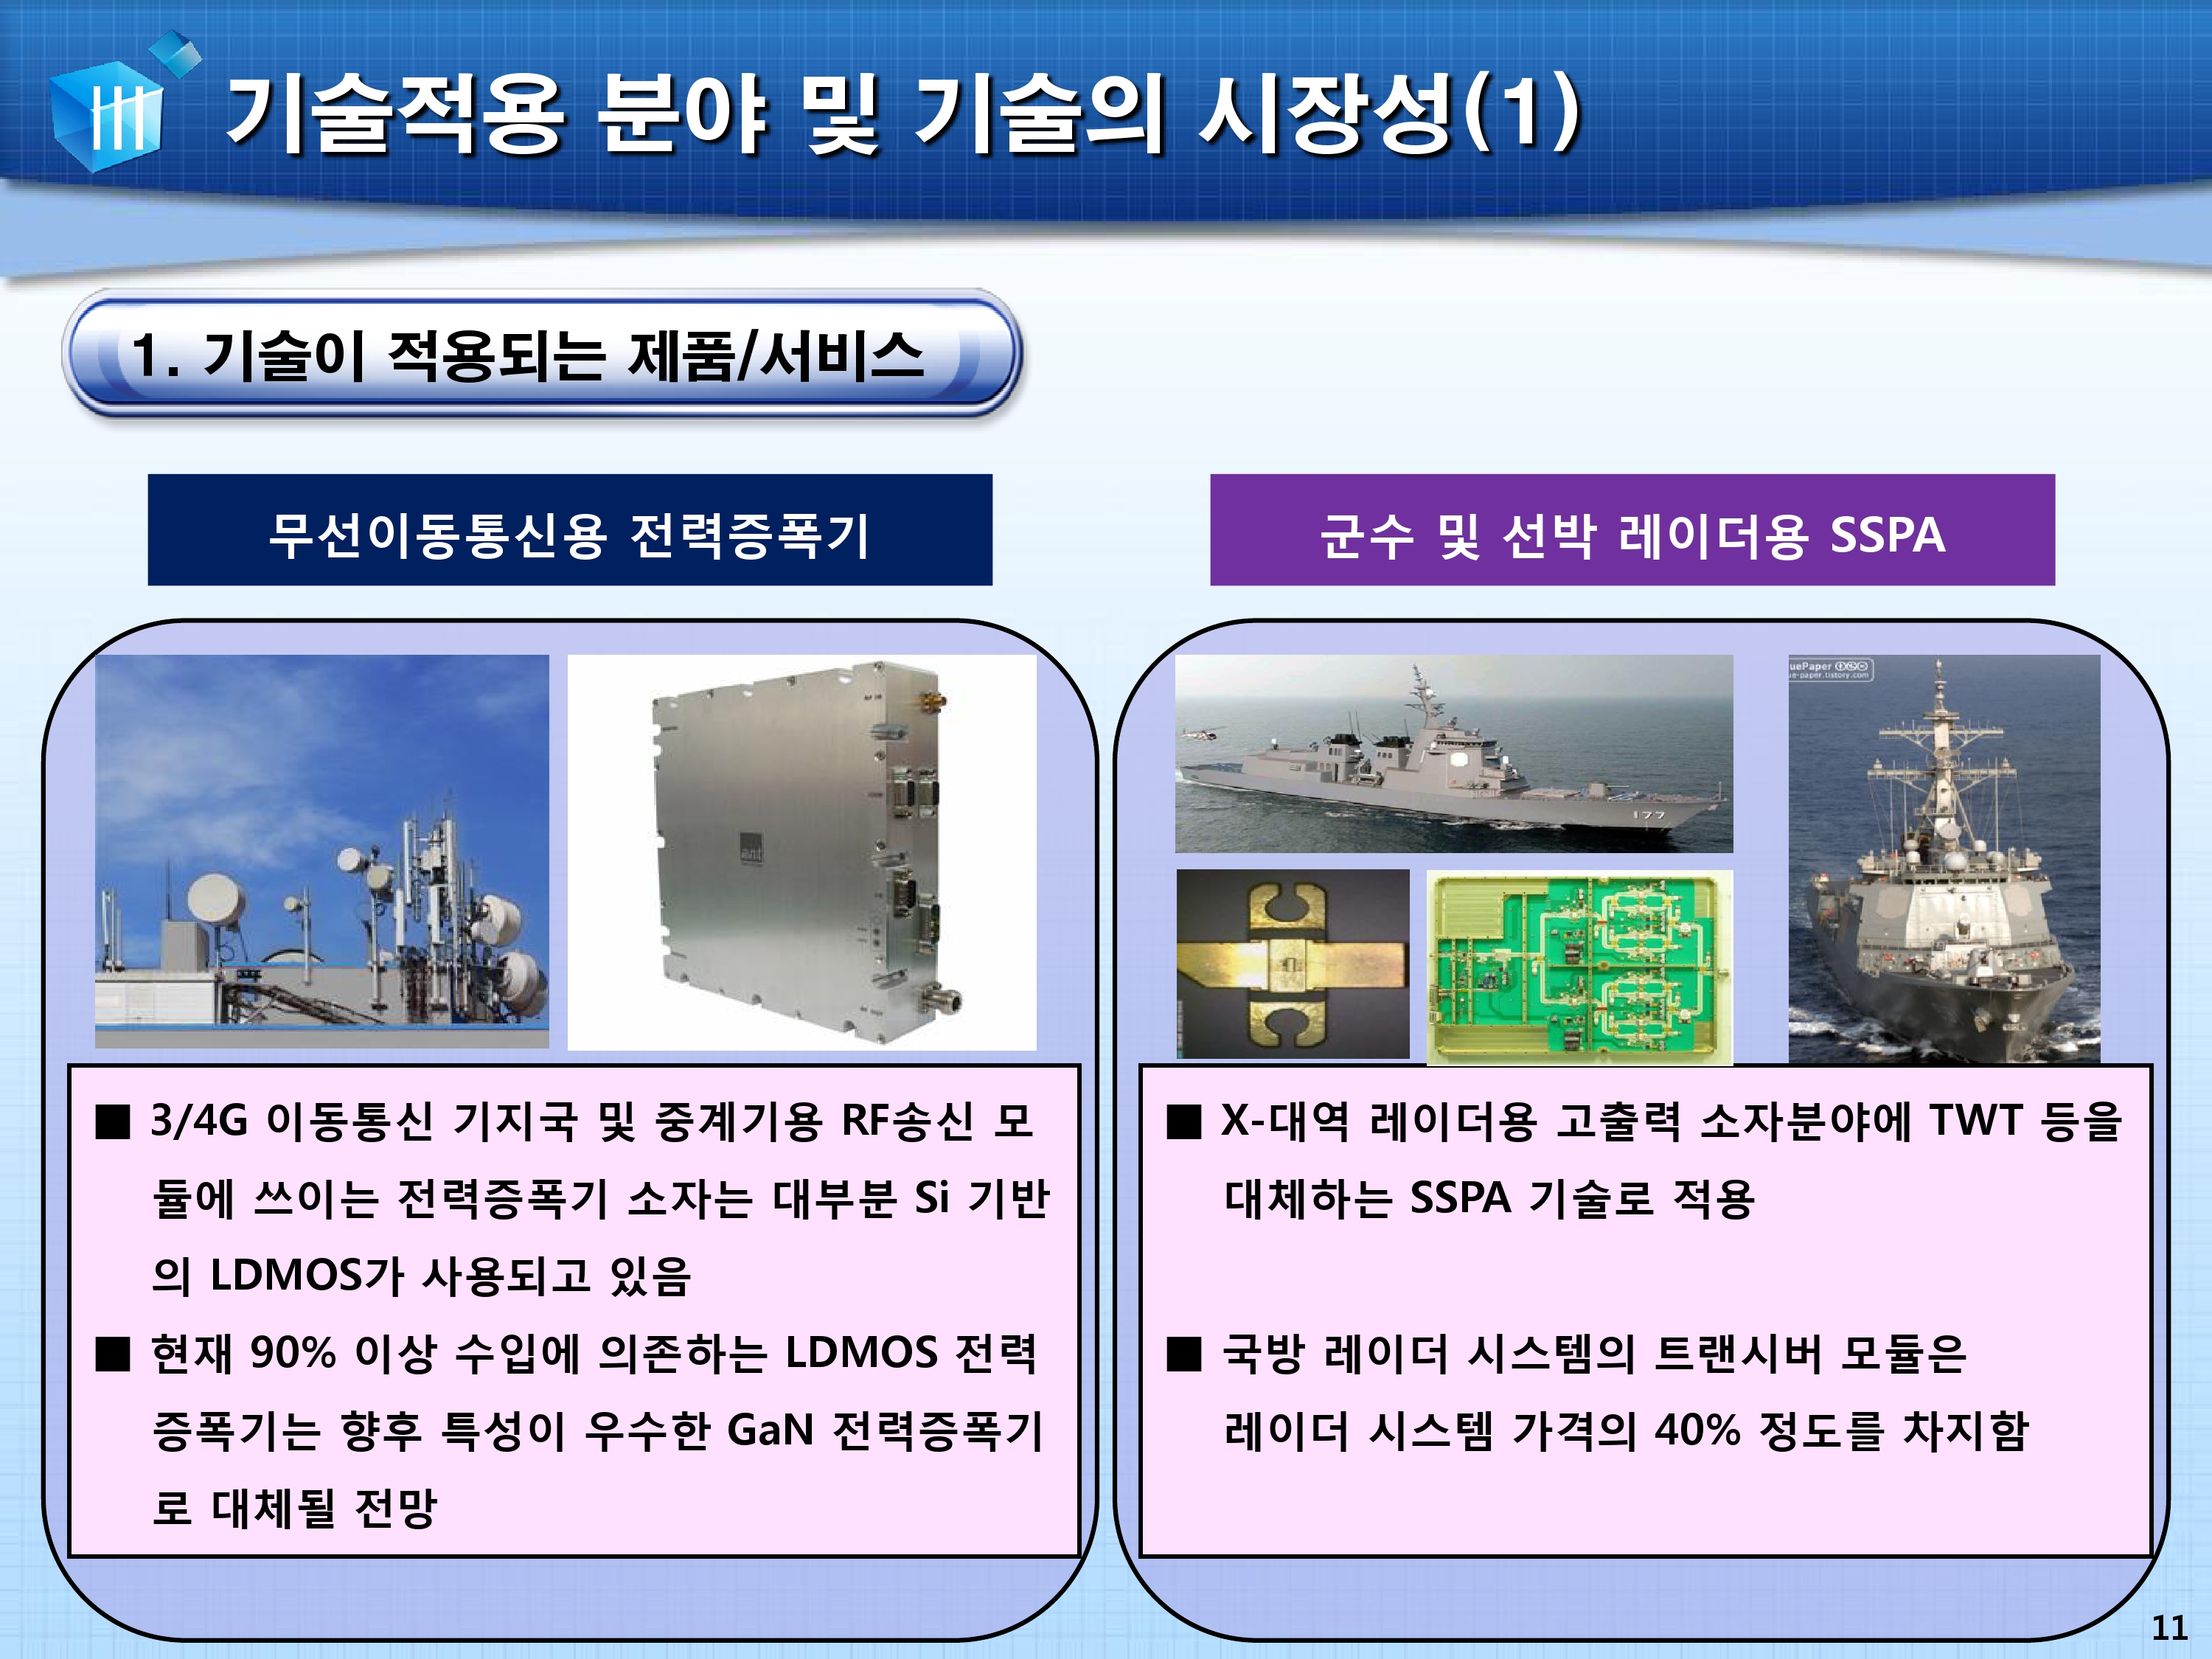 3-10. X-BAND 30W급 GAN 전력소자 기술-11.jpg